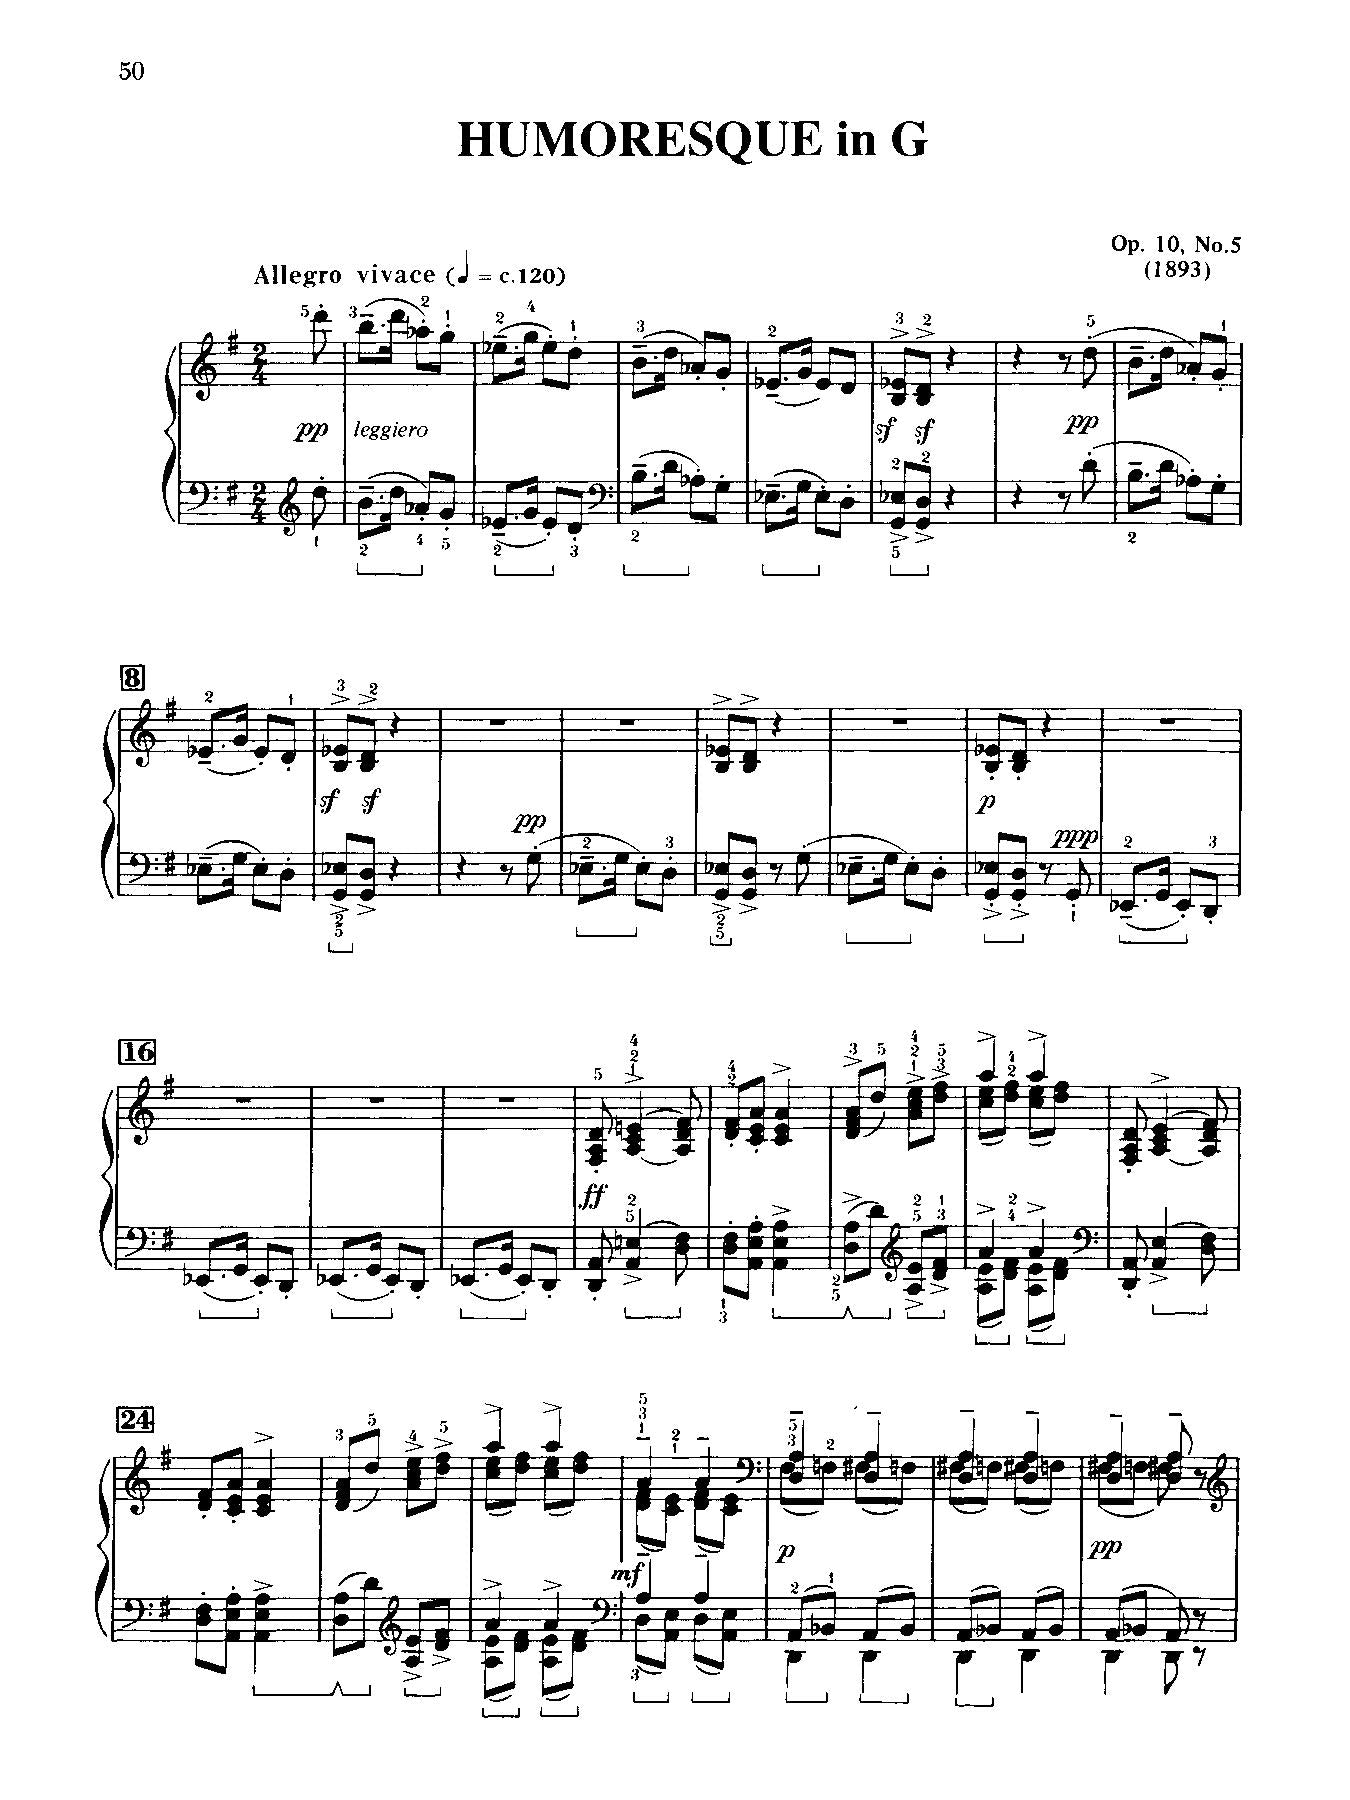 Rachmaninoff: Selected Works